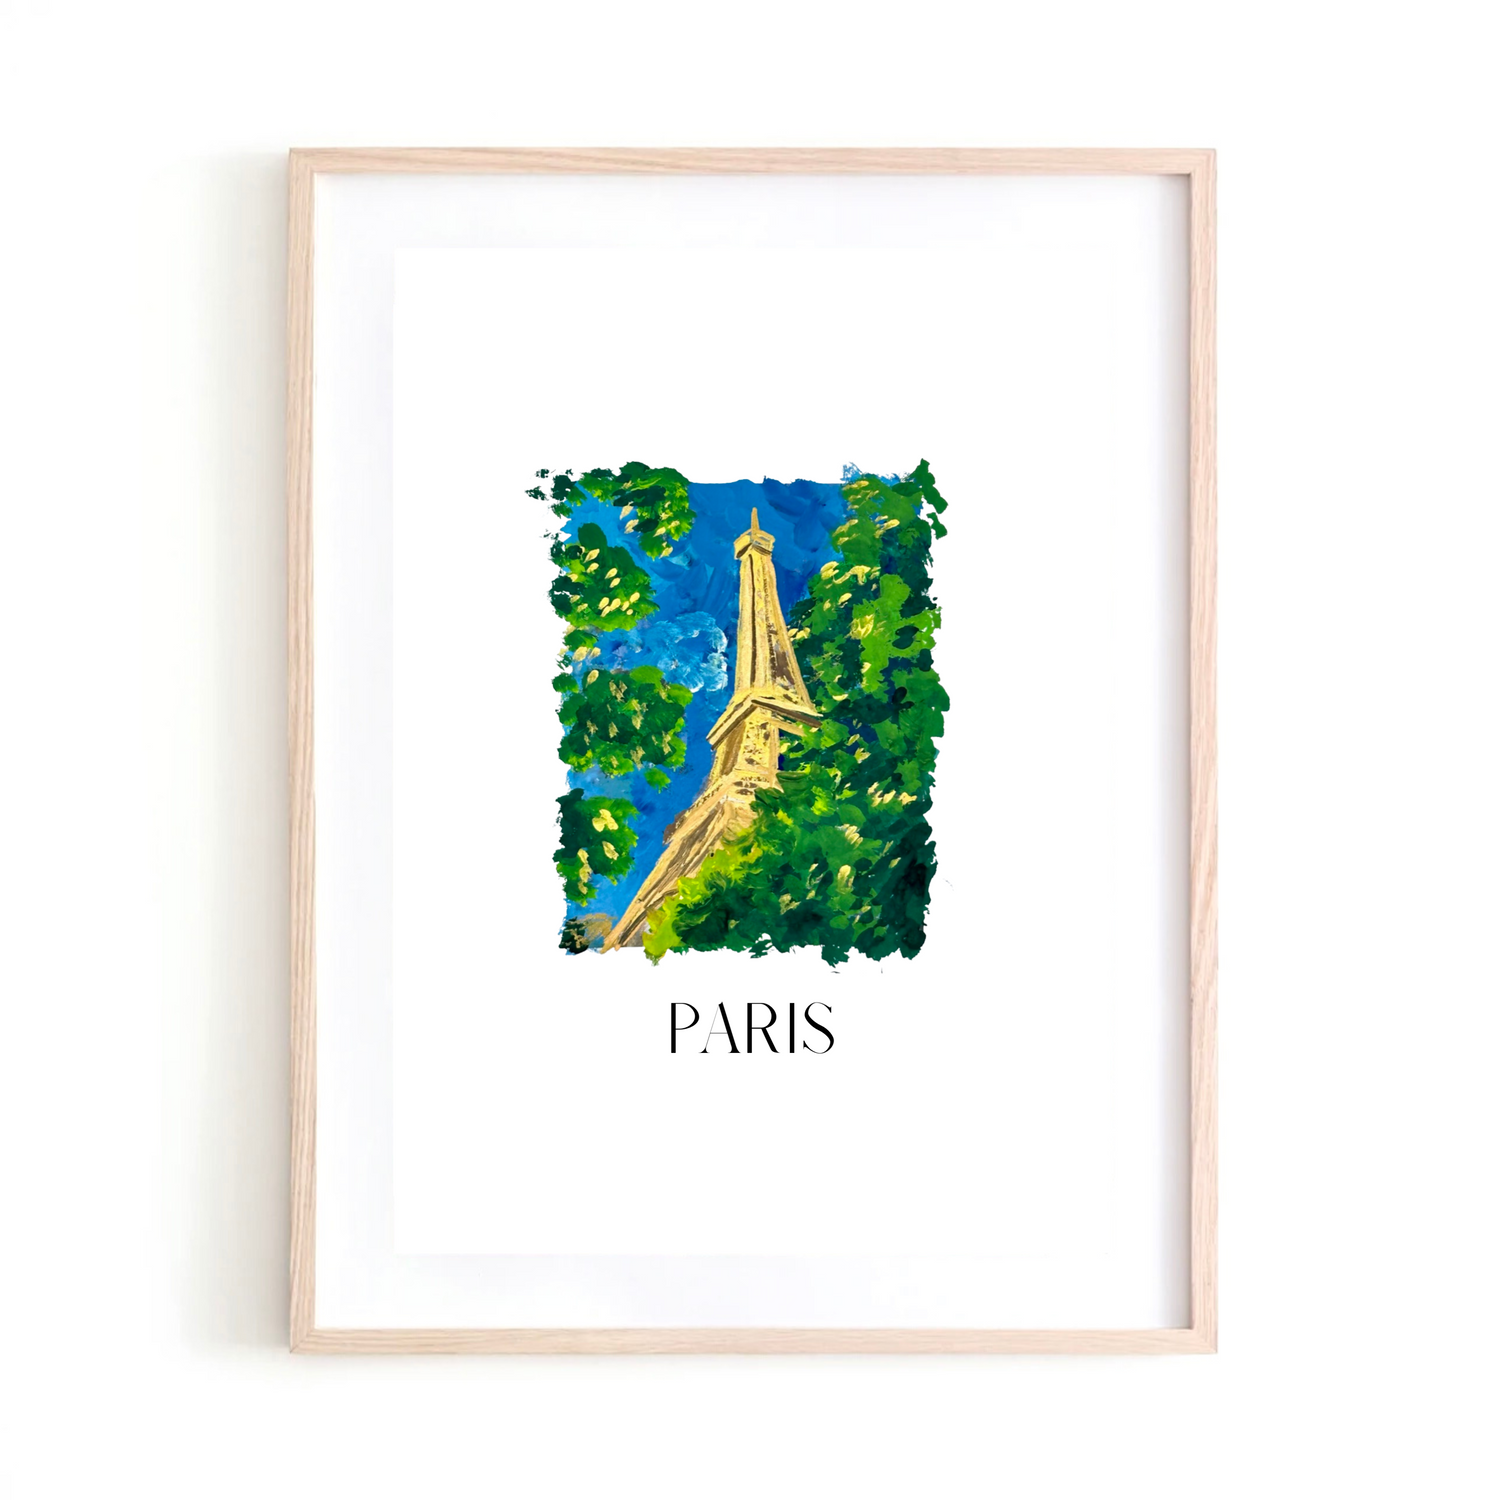 Paris Day 1 art print